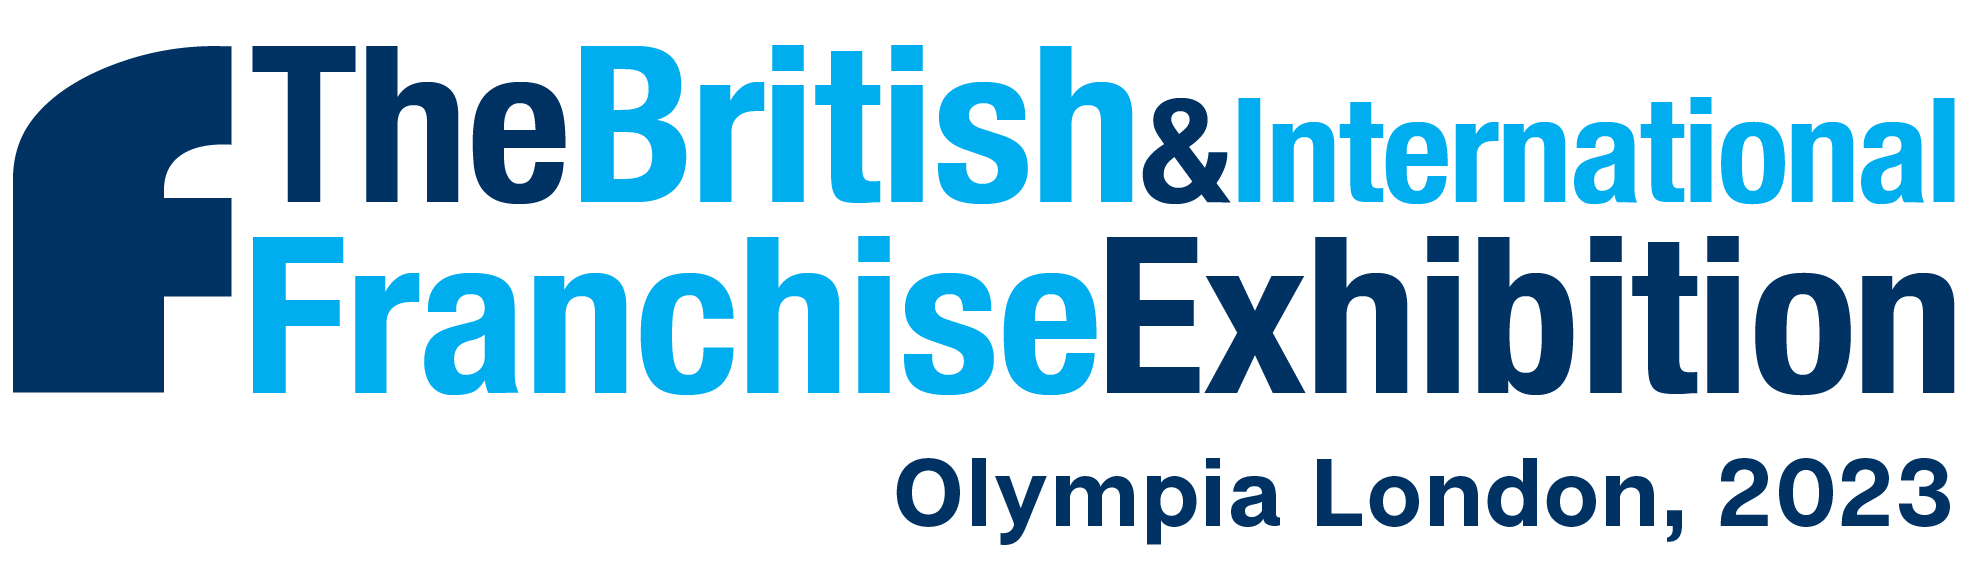 The British & International Franchise Exhibition 2023